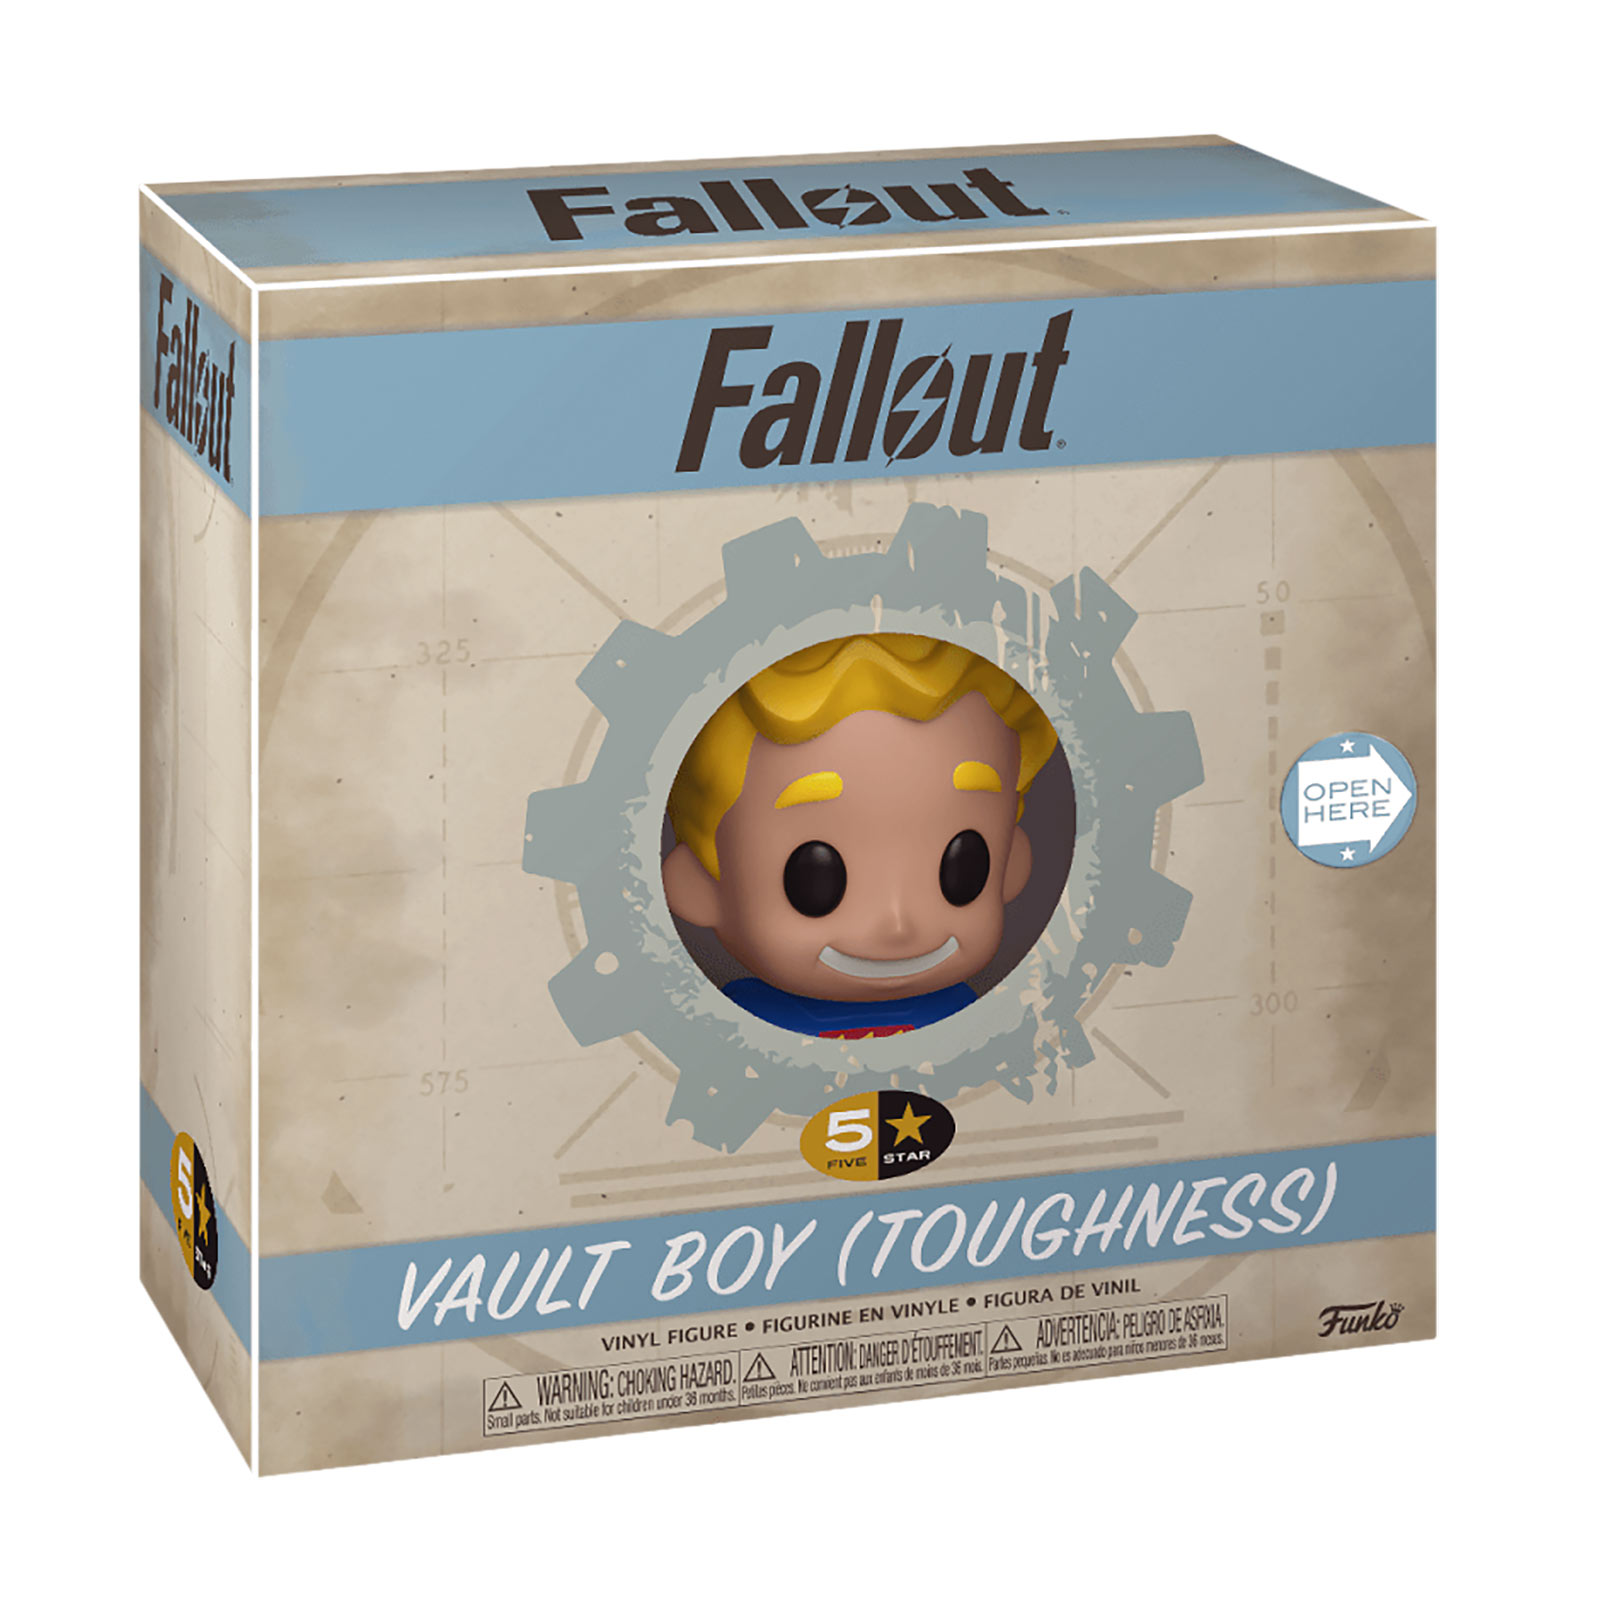 Fallout - Vault Boy Toughness Funko Five Star Figur